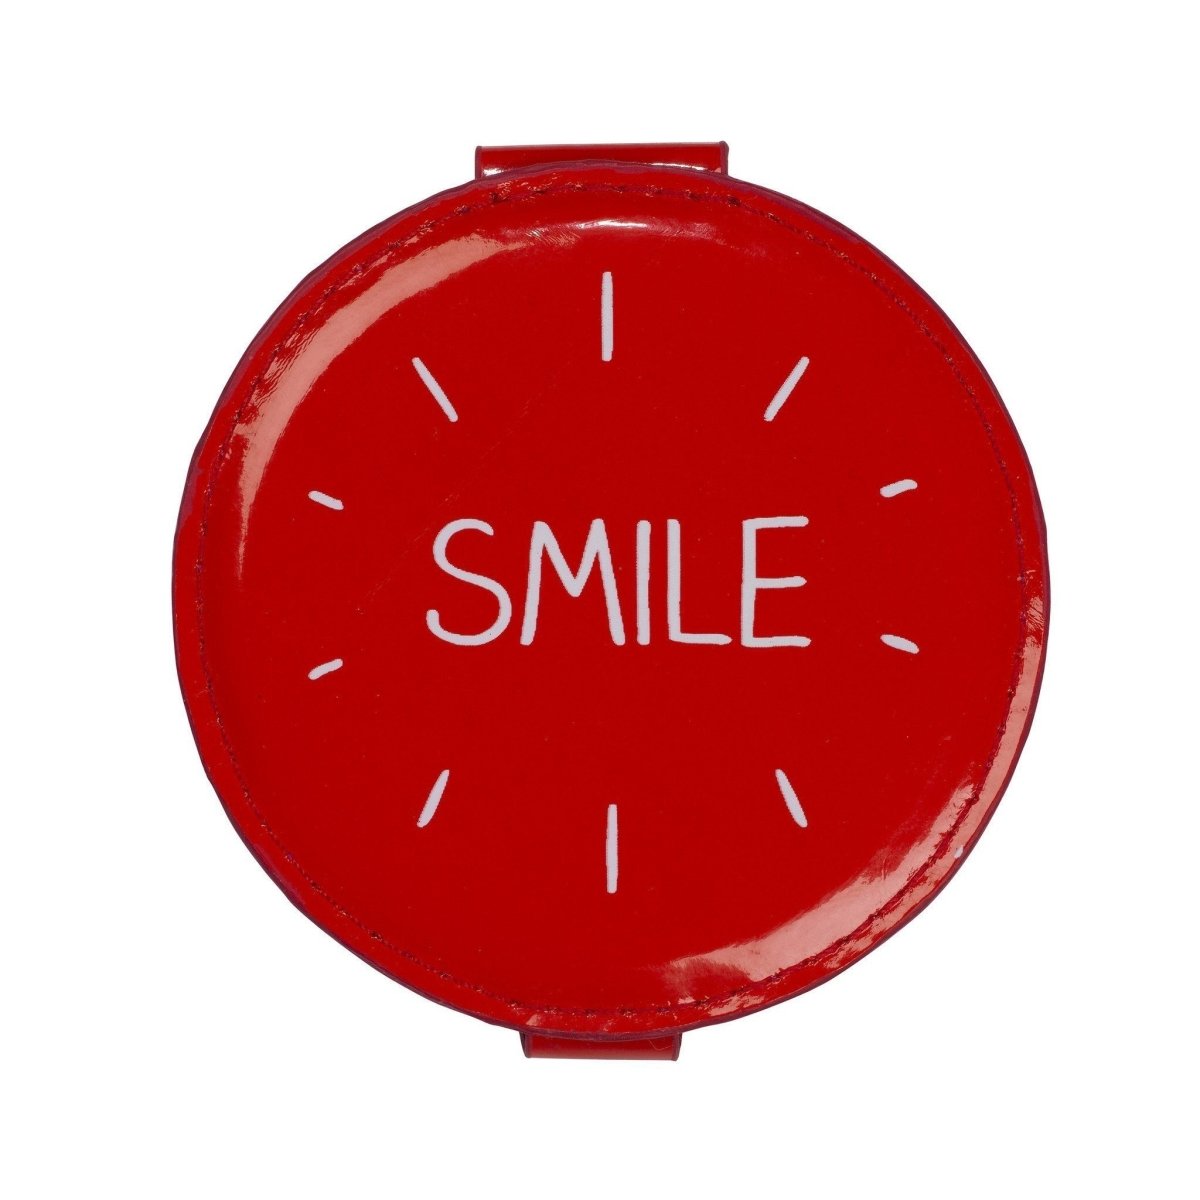 Smile Red Compact Mirror - Happy Jackson - mzube Bathroom